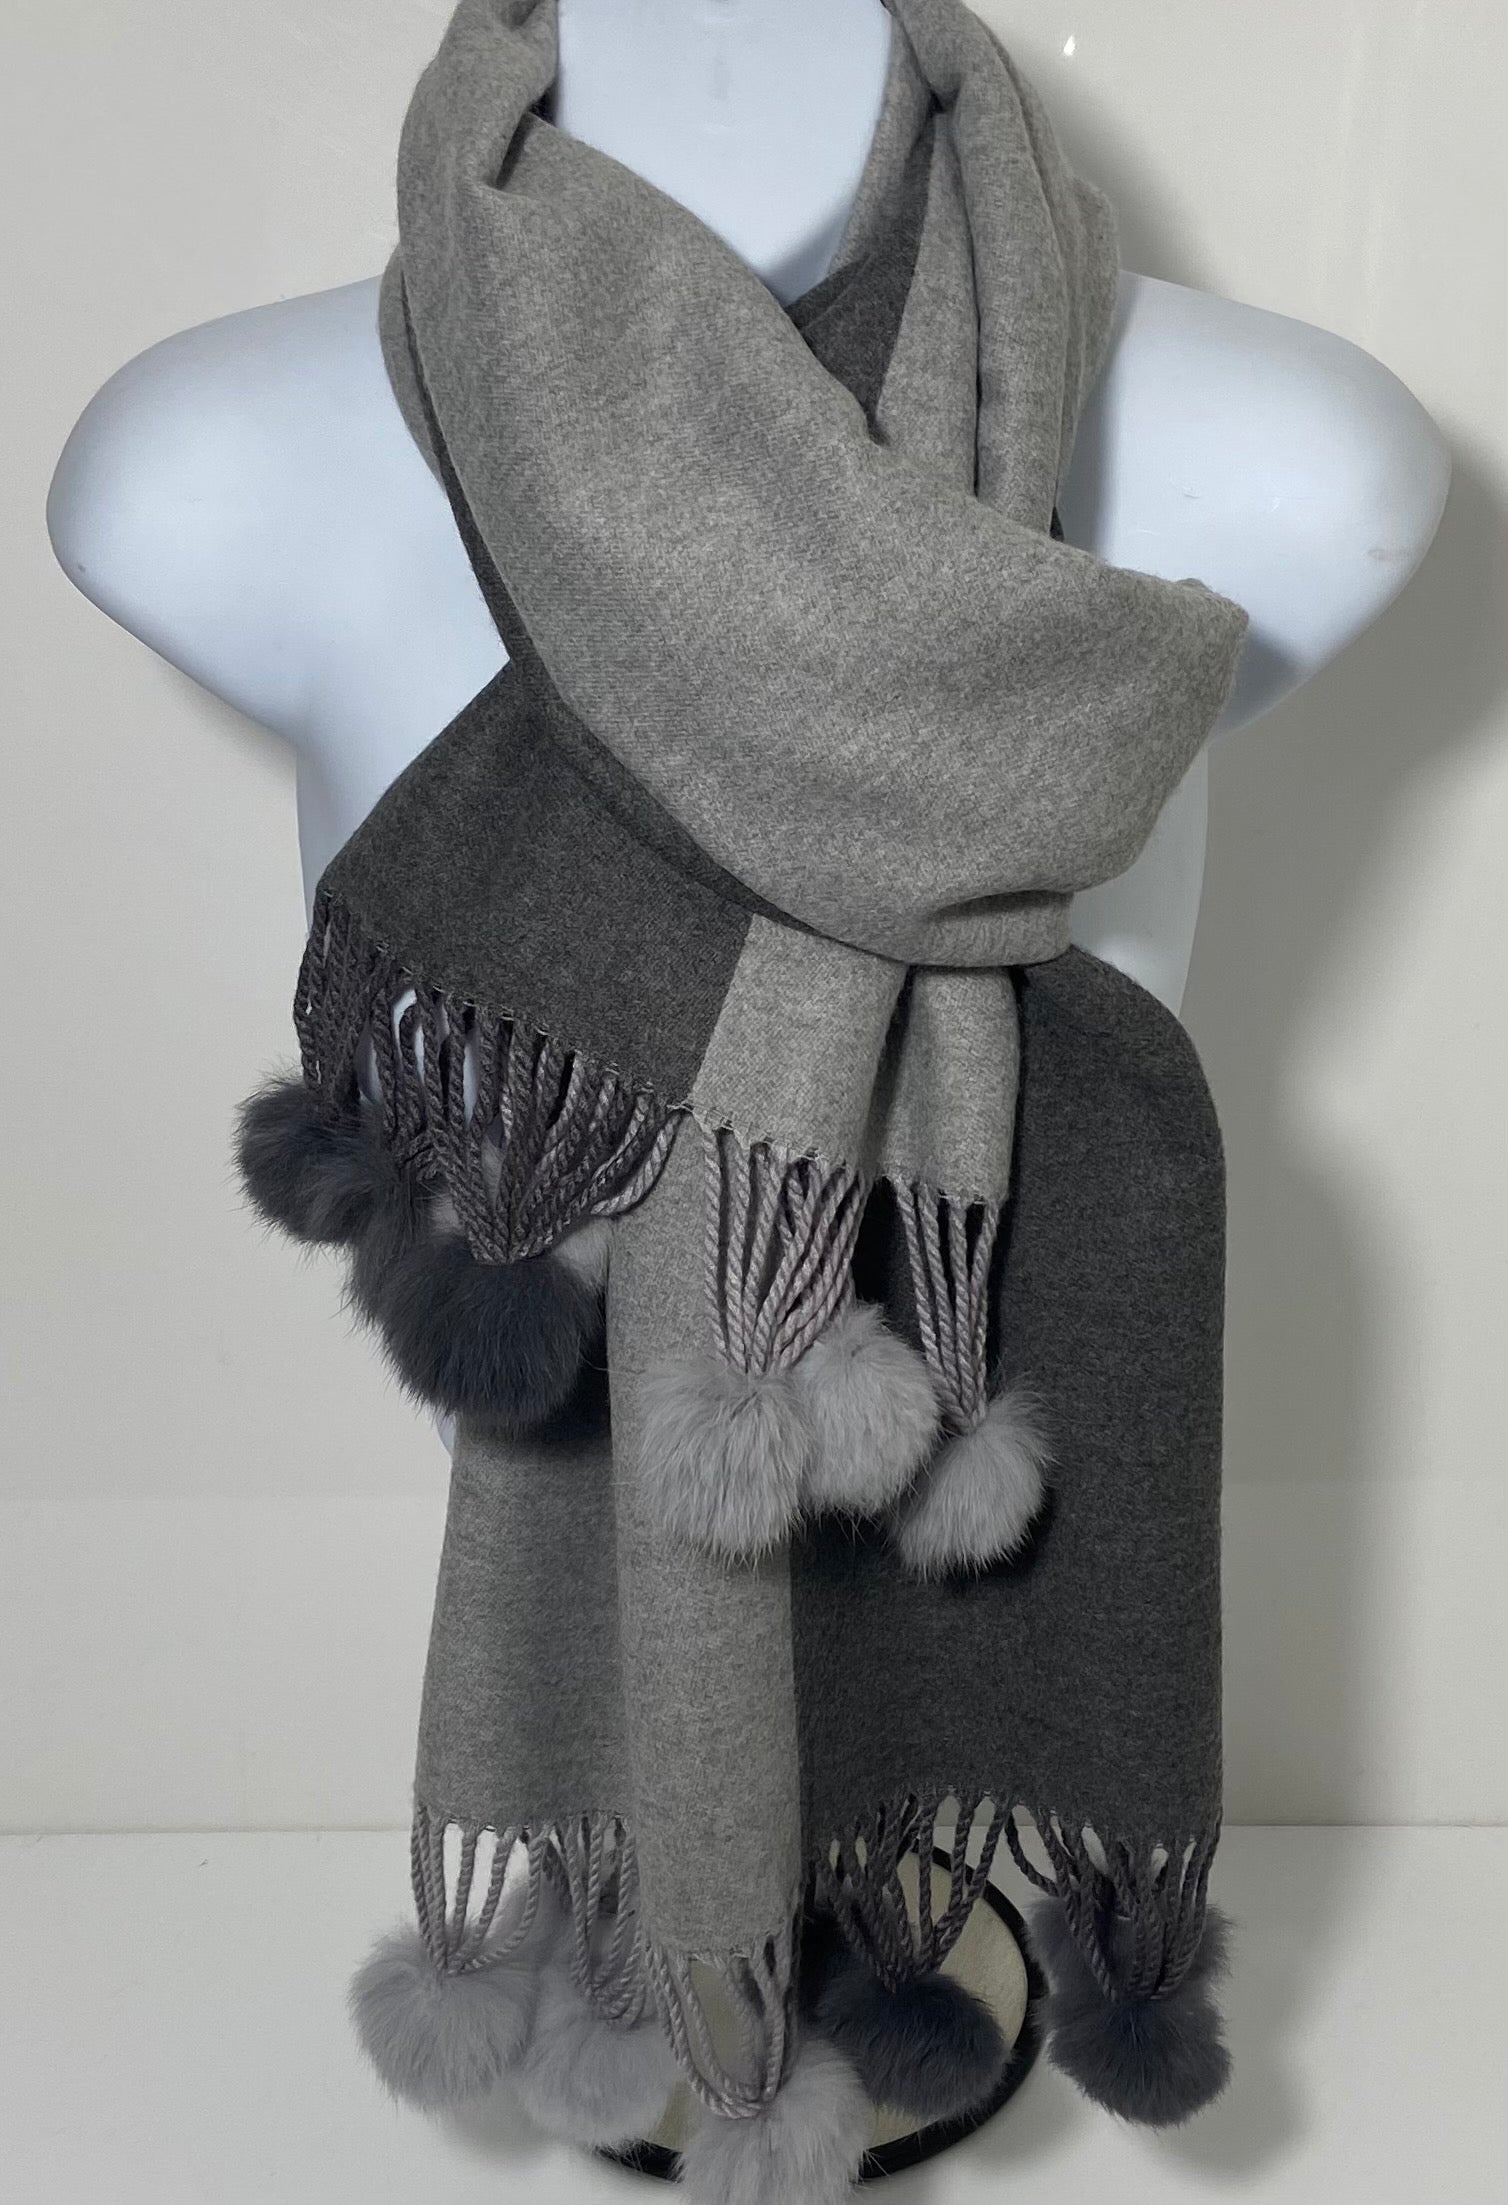 60% Cashmere mix, super soft pompom scarf in light grey and dark grey